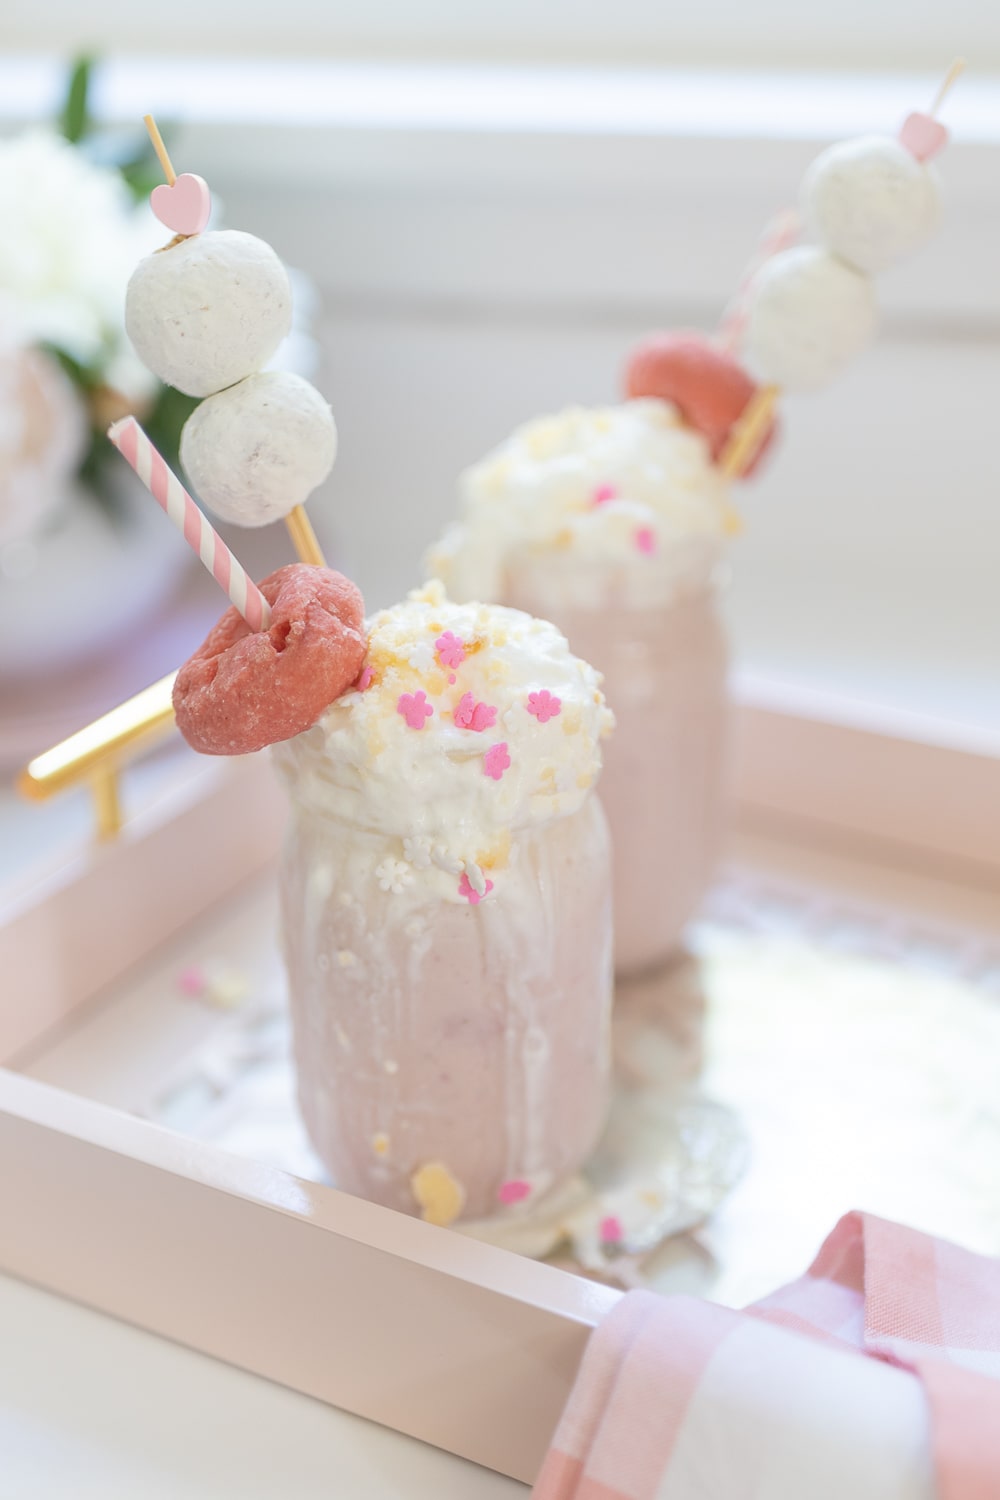 Strawberry shortcake shake recipe by blogger Stephanie Ziajka on Diary of a Debutante